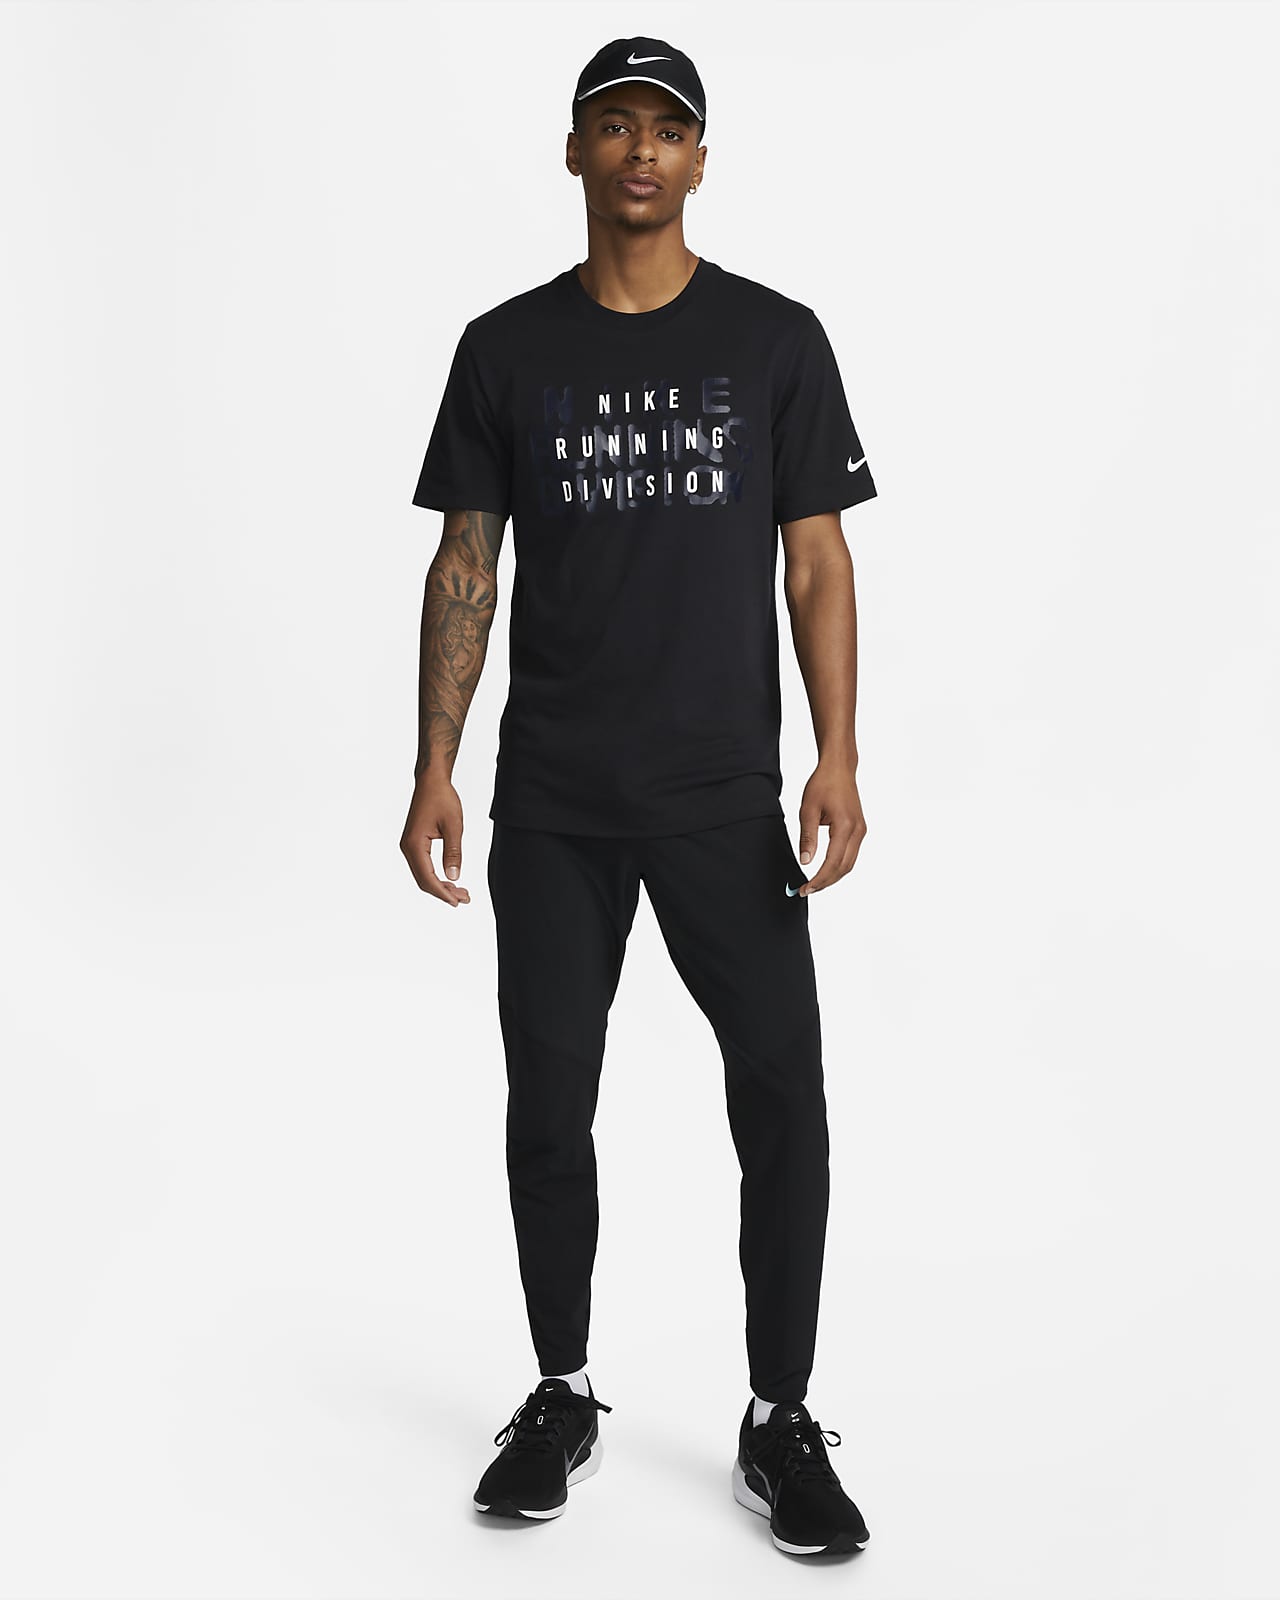 WTS] [USA-NC] Nike DRI-FIT Phenom Run Division Hybrid Running Pants, Men's  S, NWT